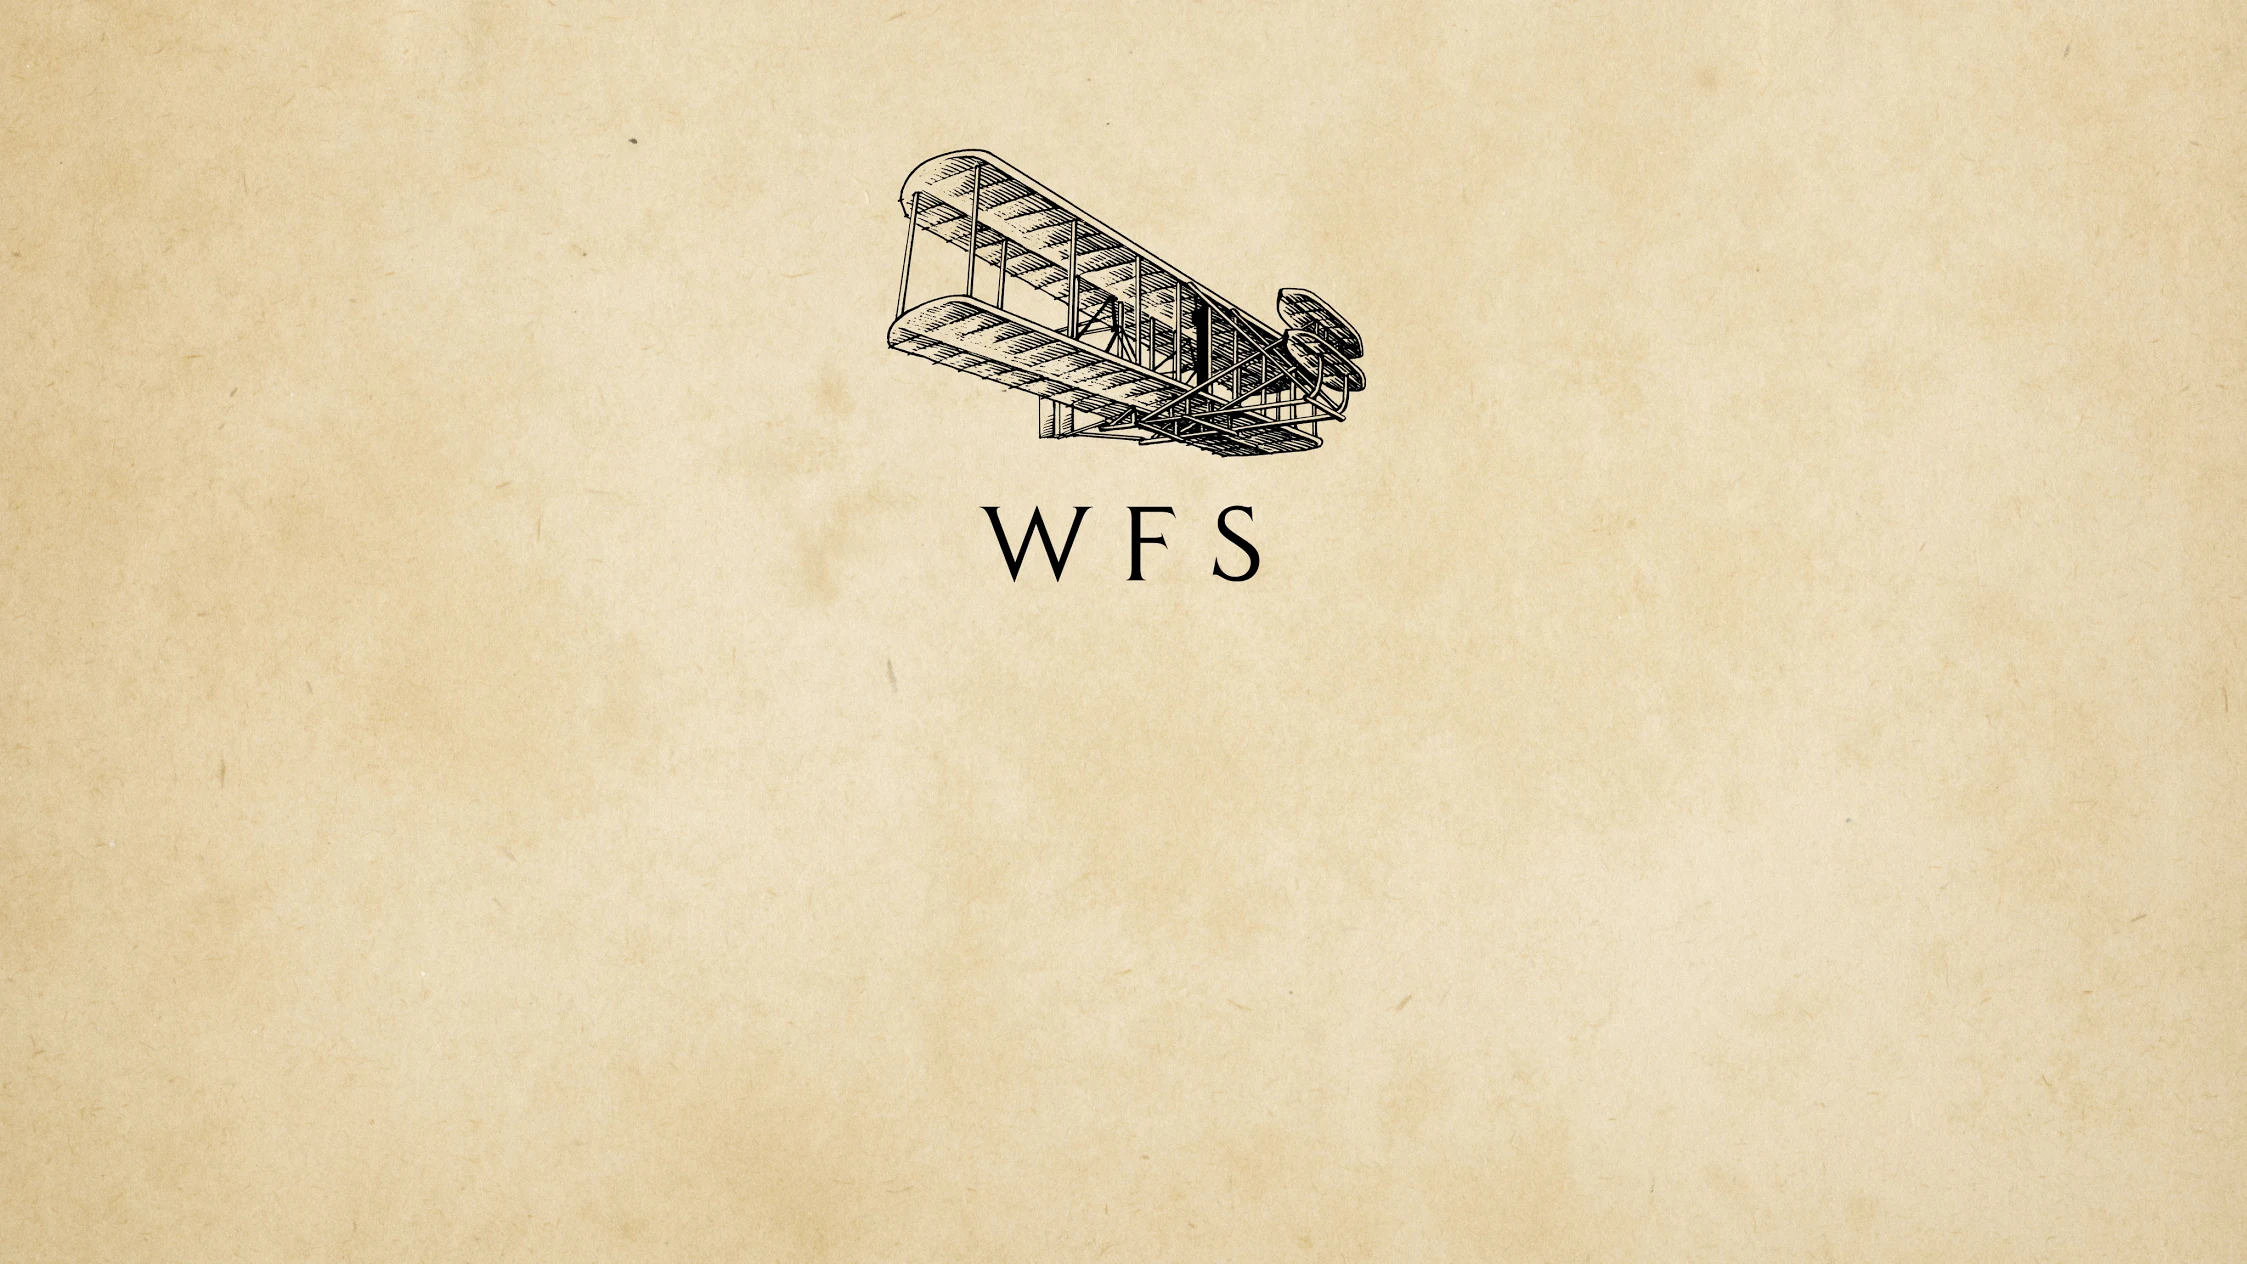 WFS, Inc.